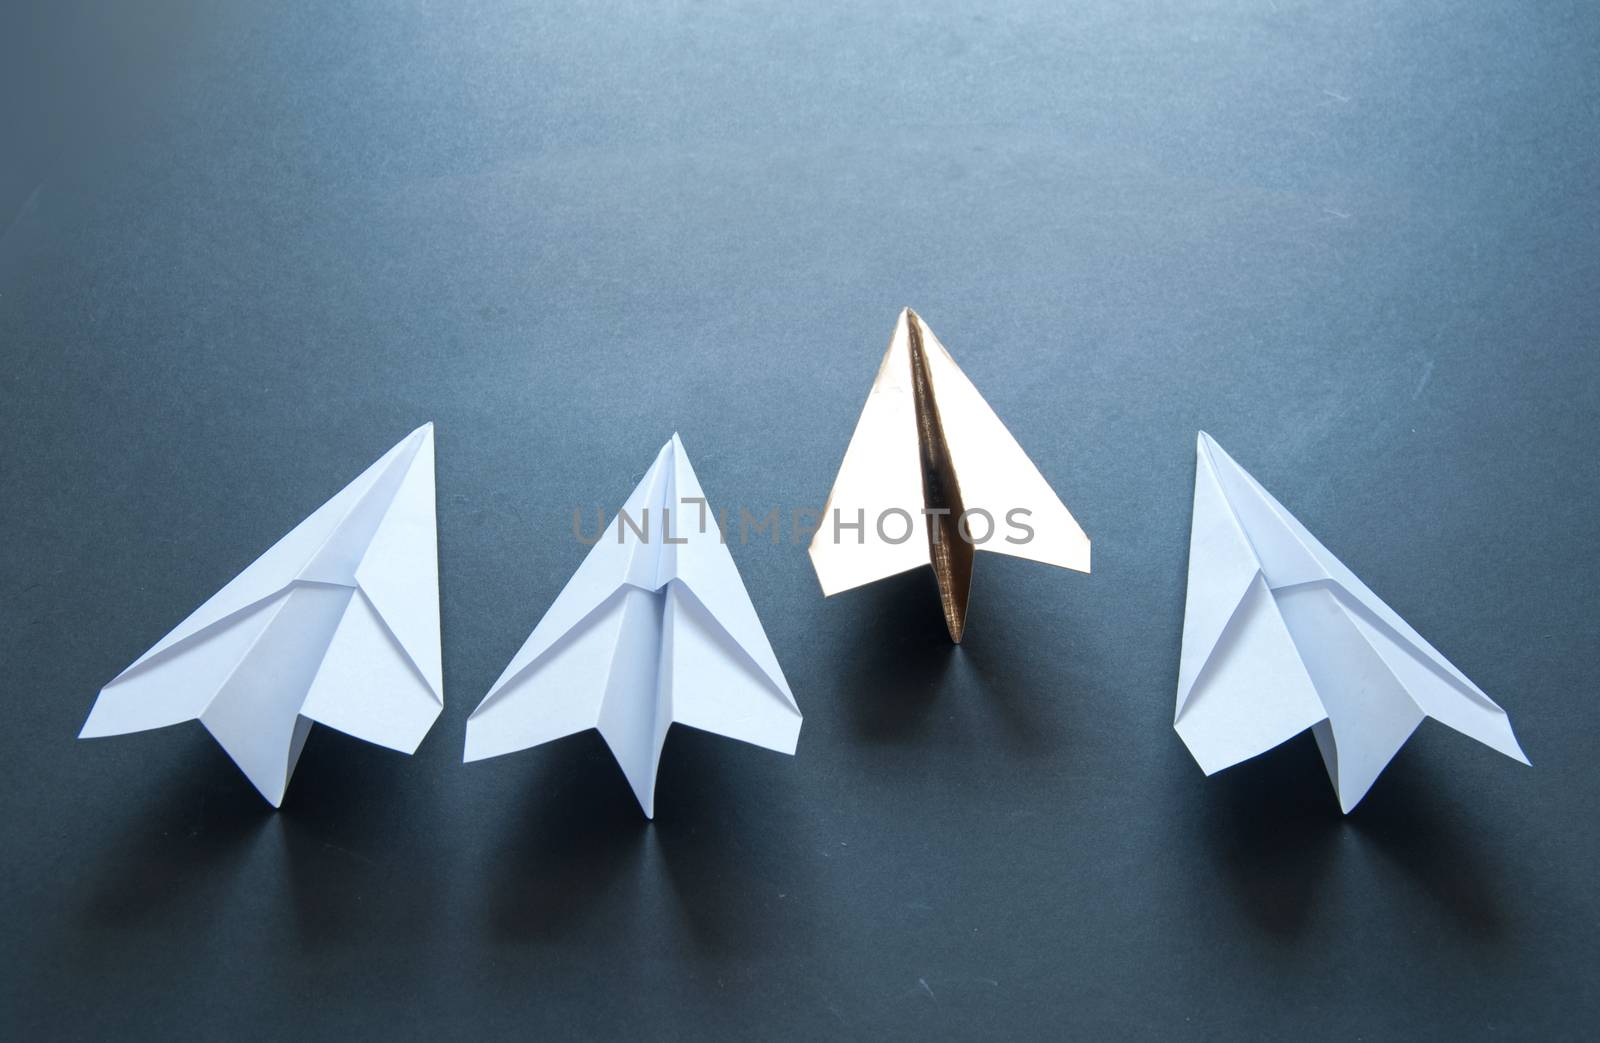 Gold paper plane leader concept by unikpix